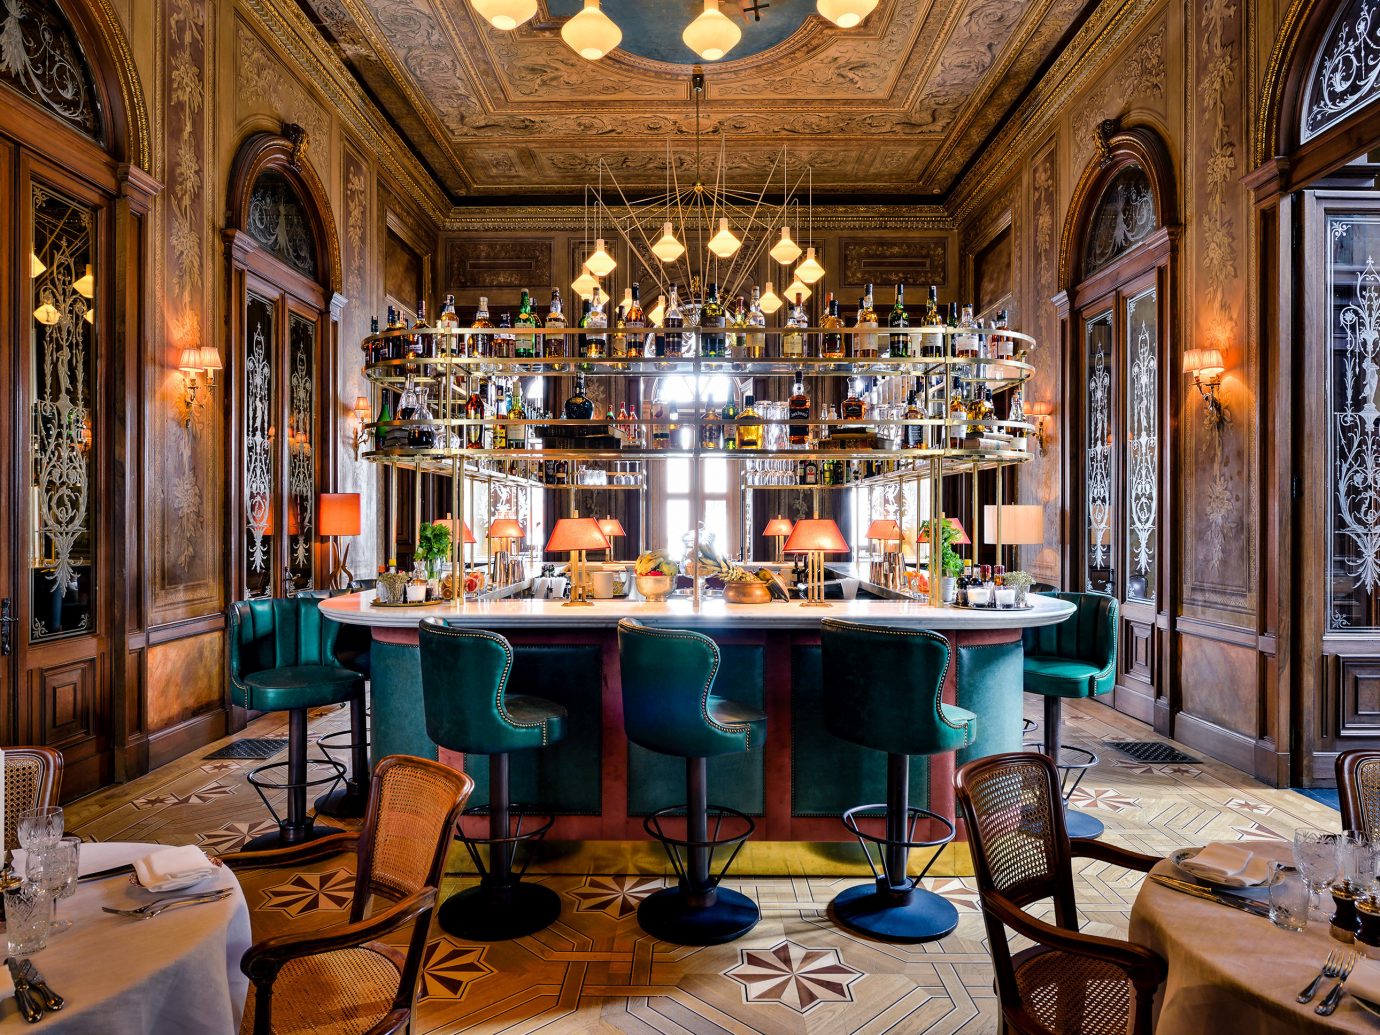 Boutique Hotels Hotels Luxury Travel indoor interior design restaurant dining room Bar set several